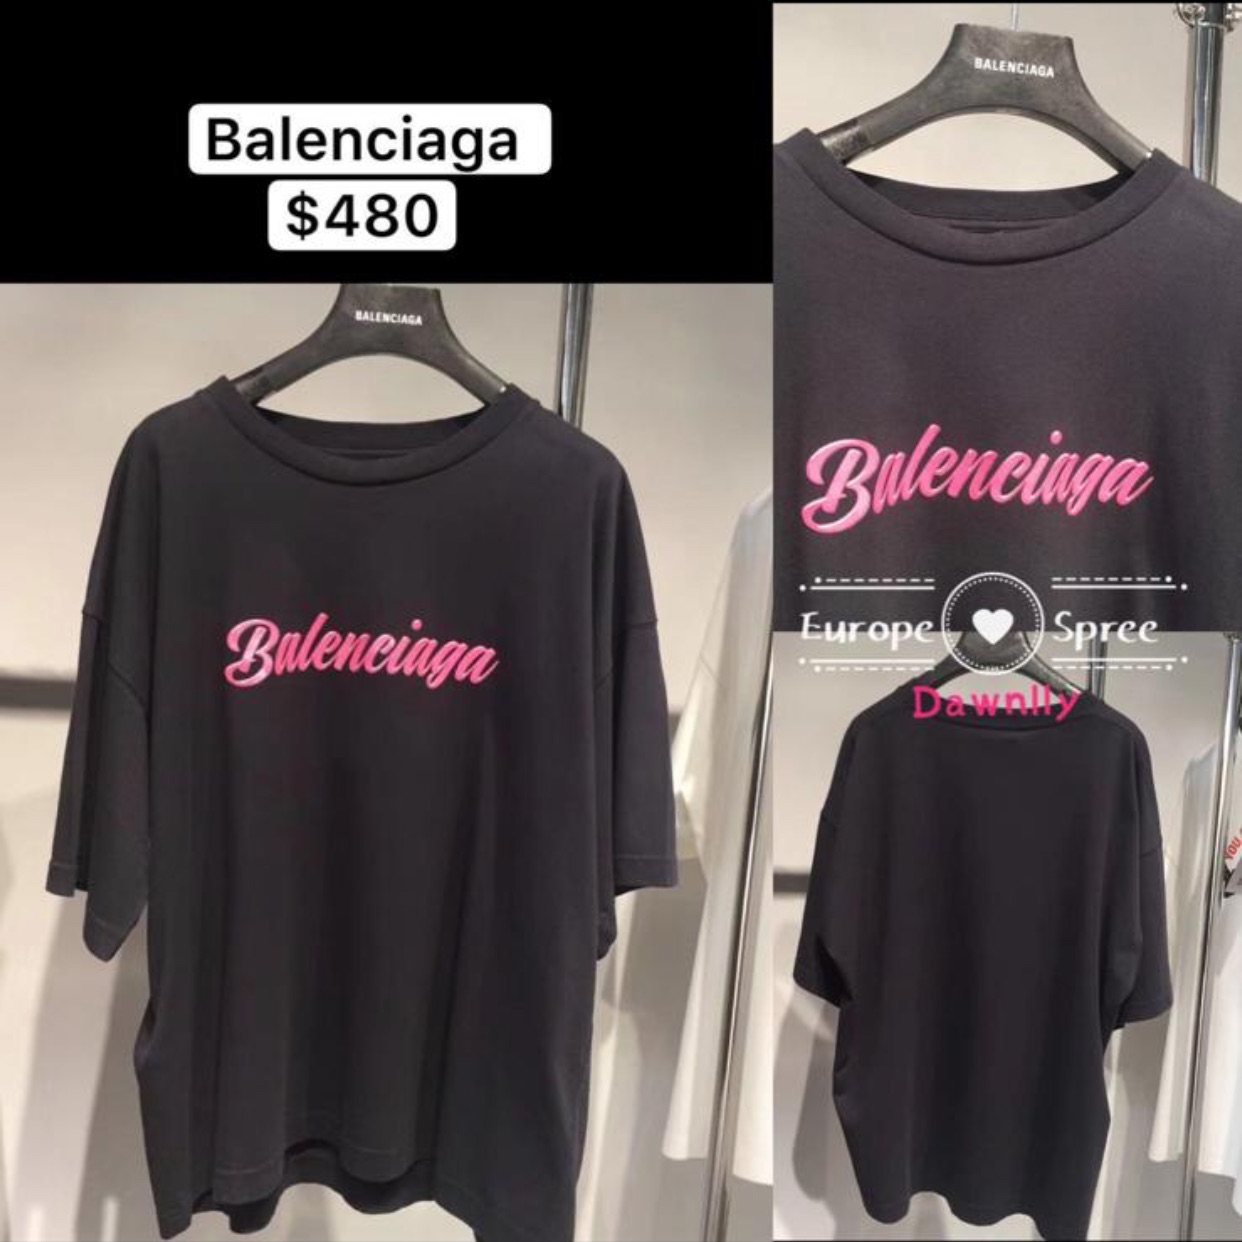 balenciaga shirts for cheap